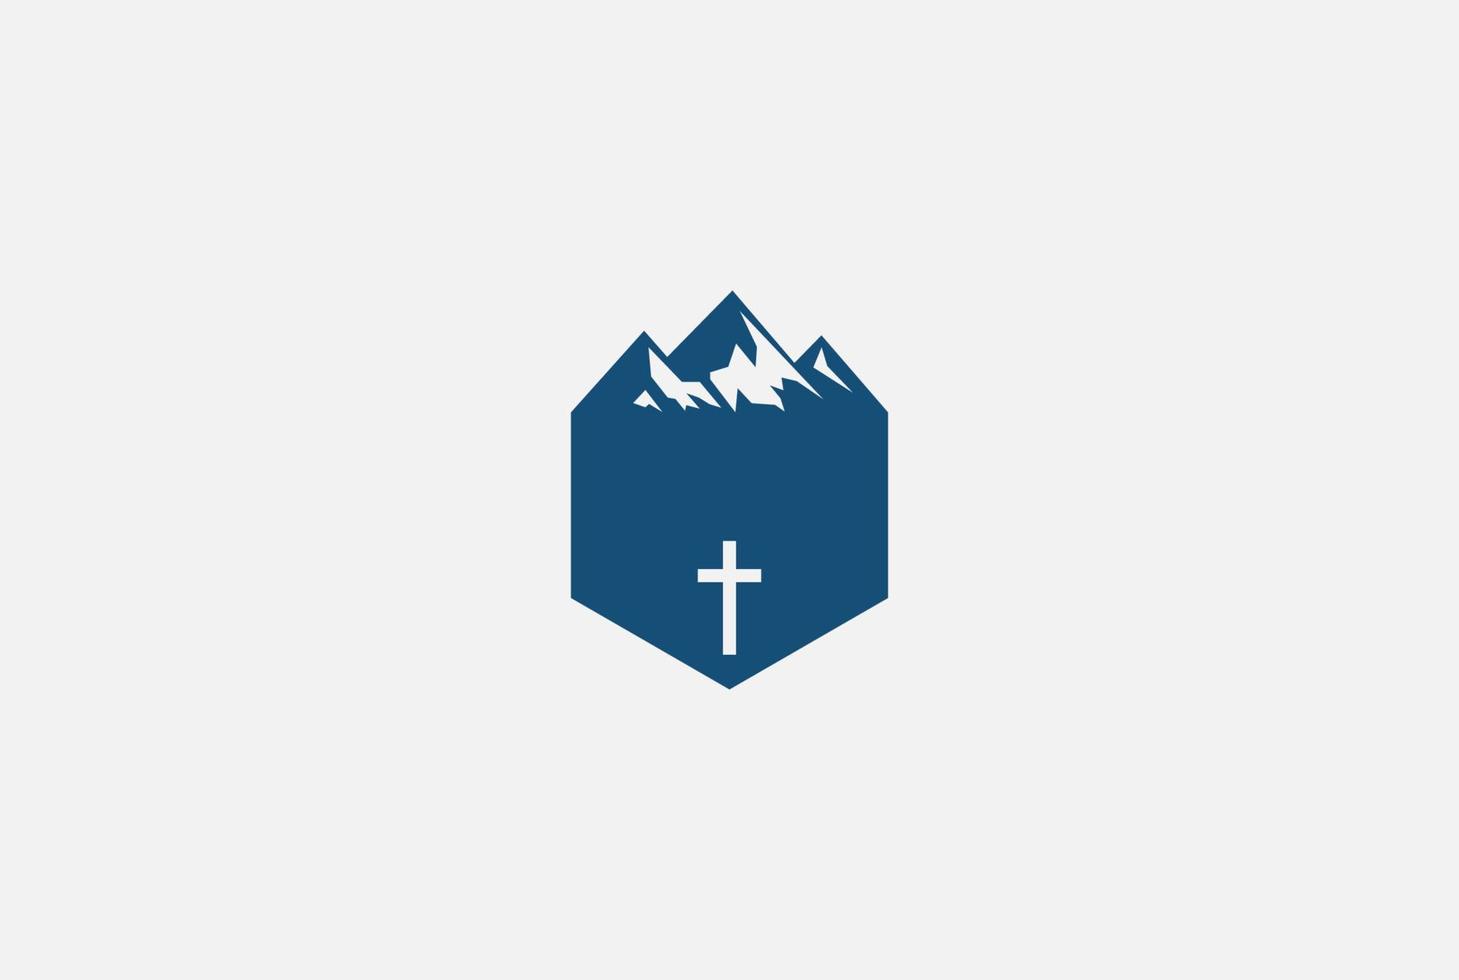 Vintage Retro Mountain with Christian Cross for Church or Chapel Religion Logo Design Vector